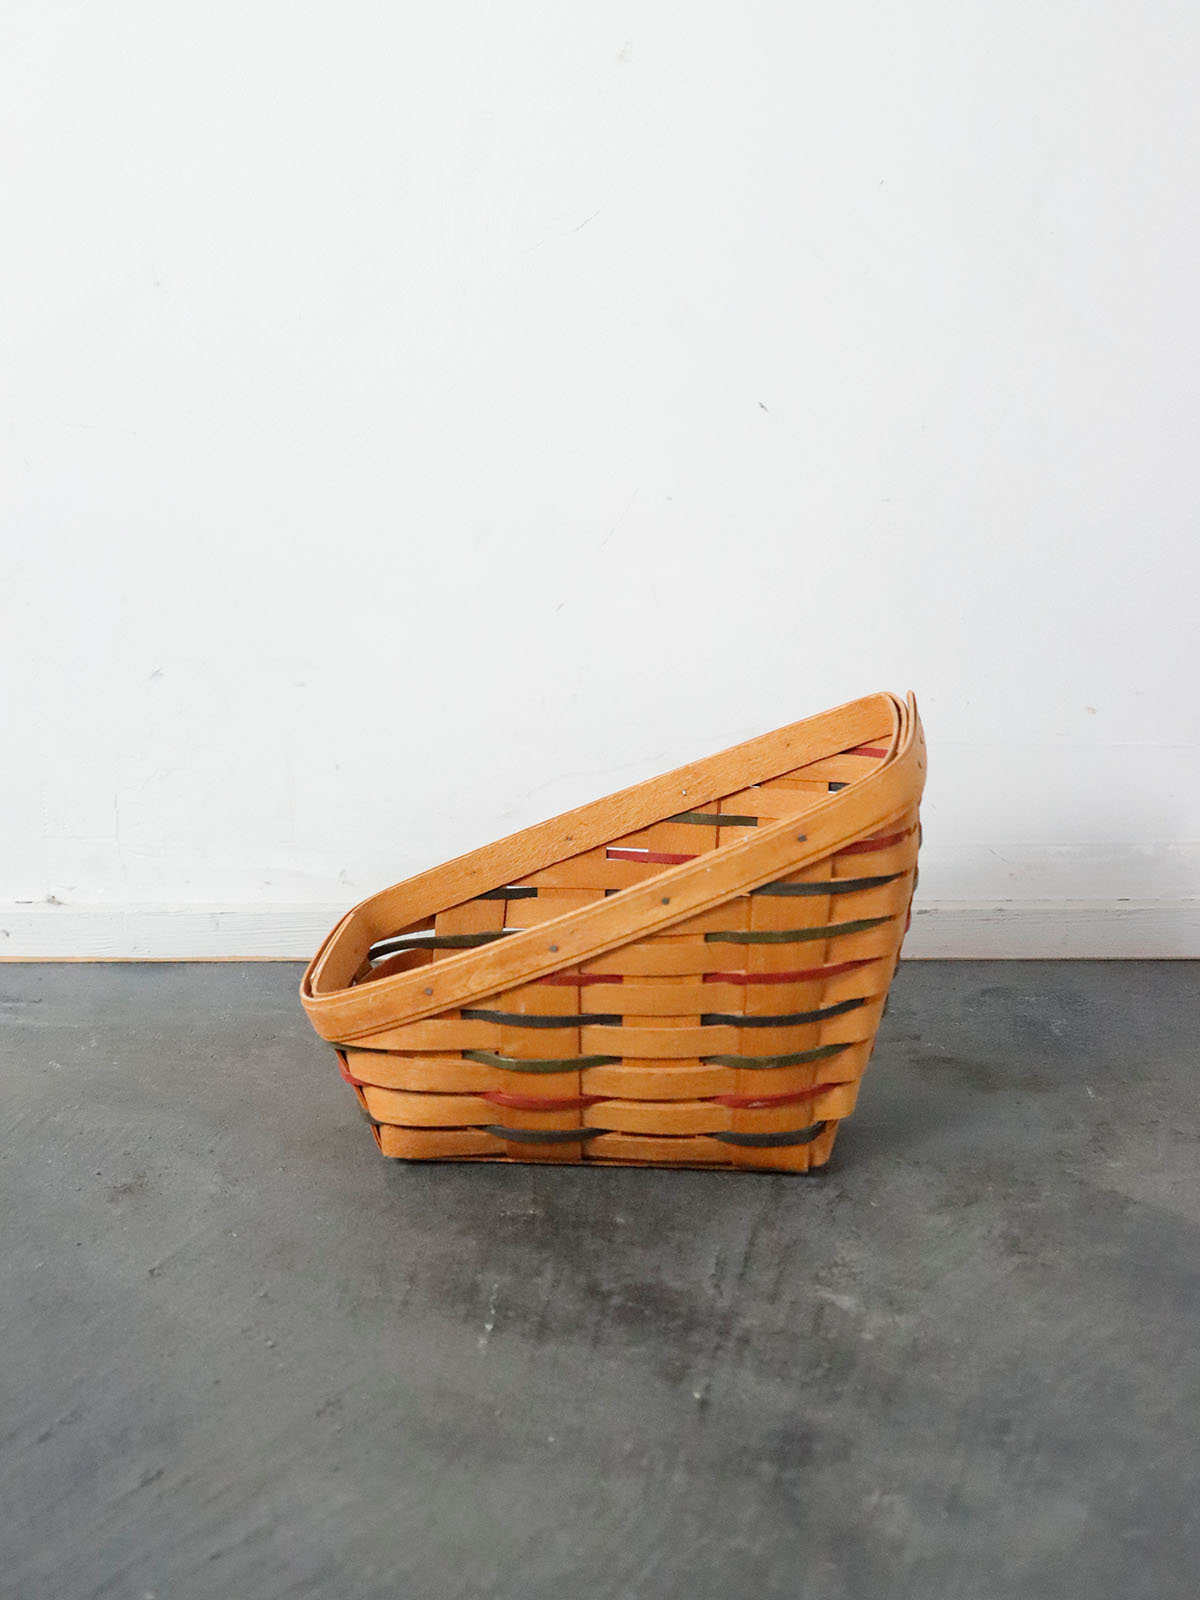 longaberger baskets company,USA,vintage,wood basket,handmade